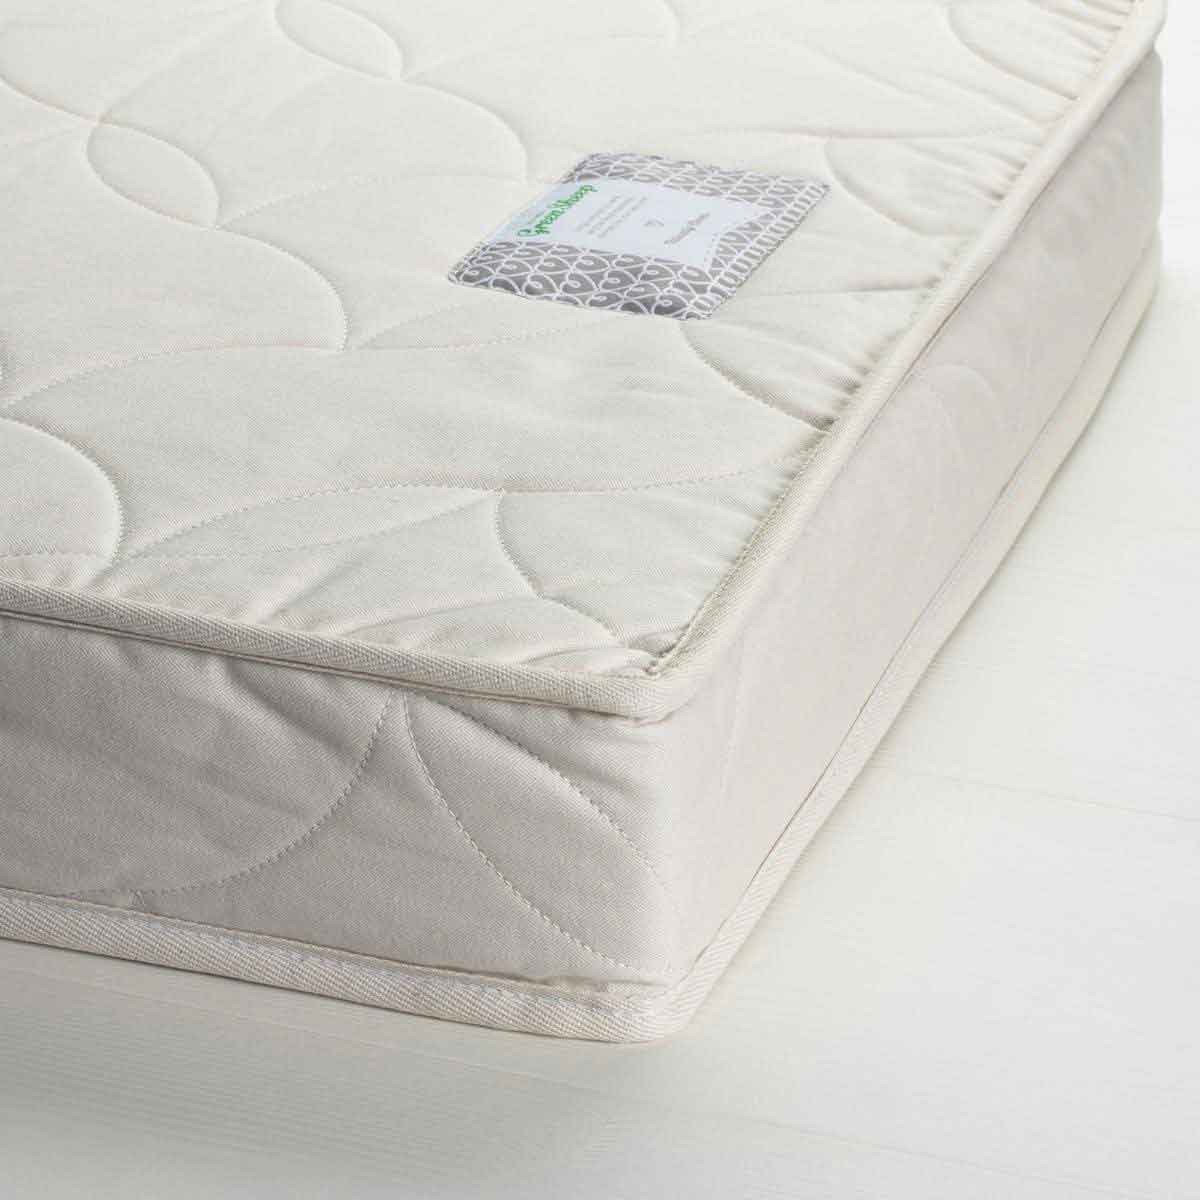 cot bed mattress 132 x 77